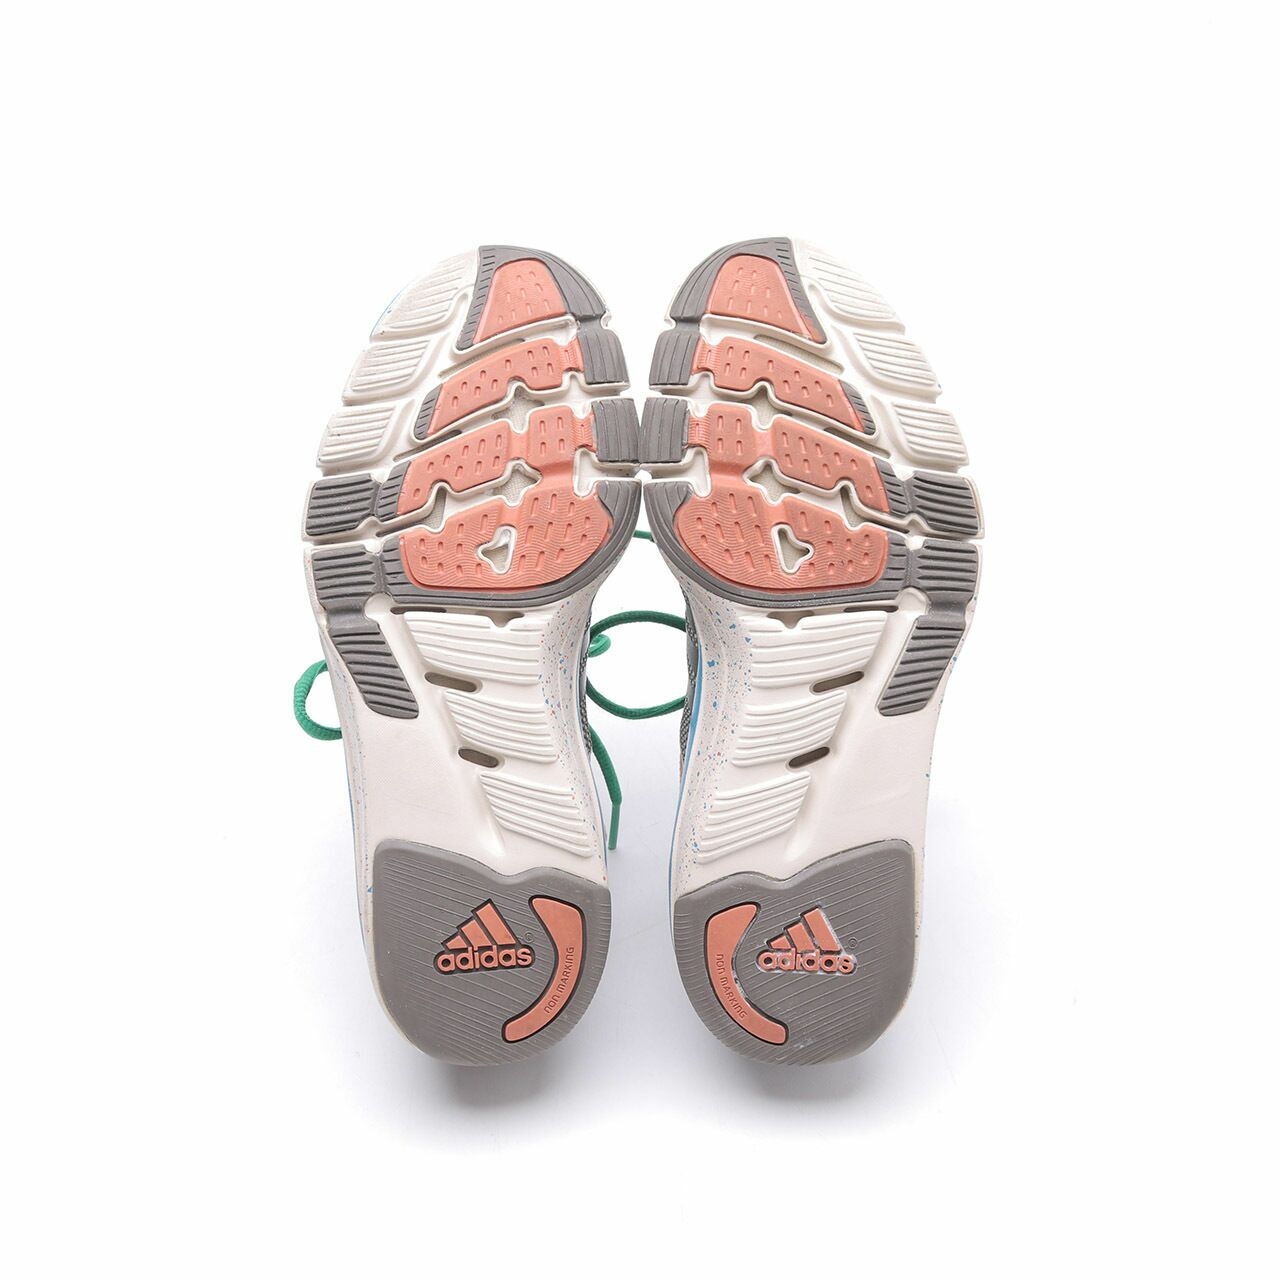 Adidas CC Adipure Light Scree & Shell Beige & Rose Tan Sneaker